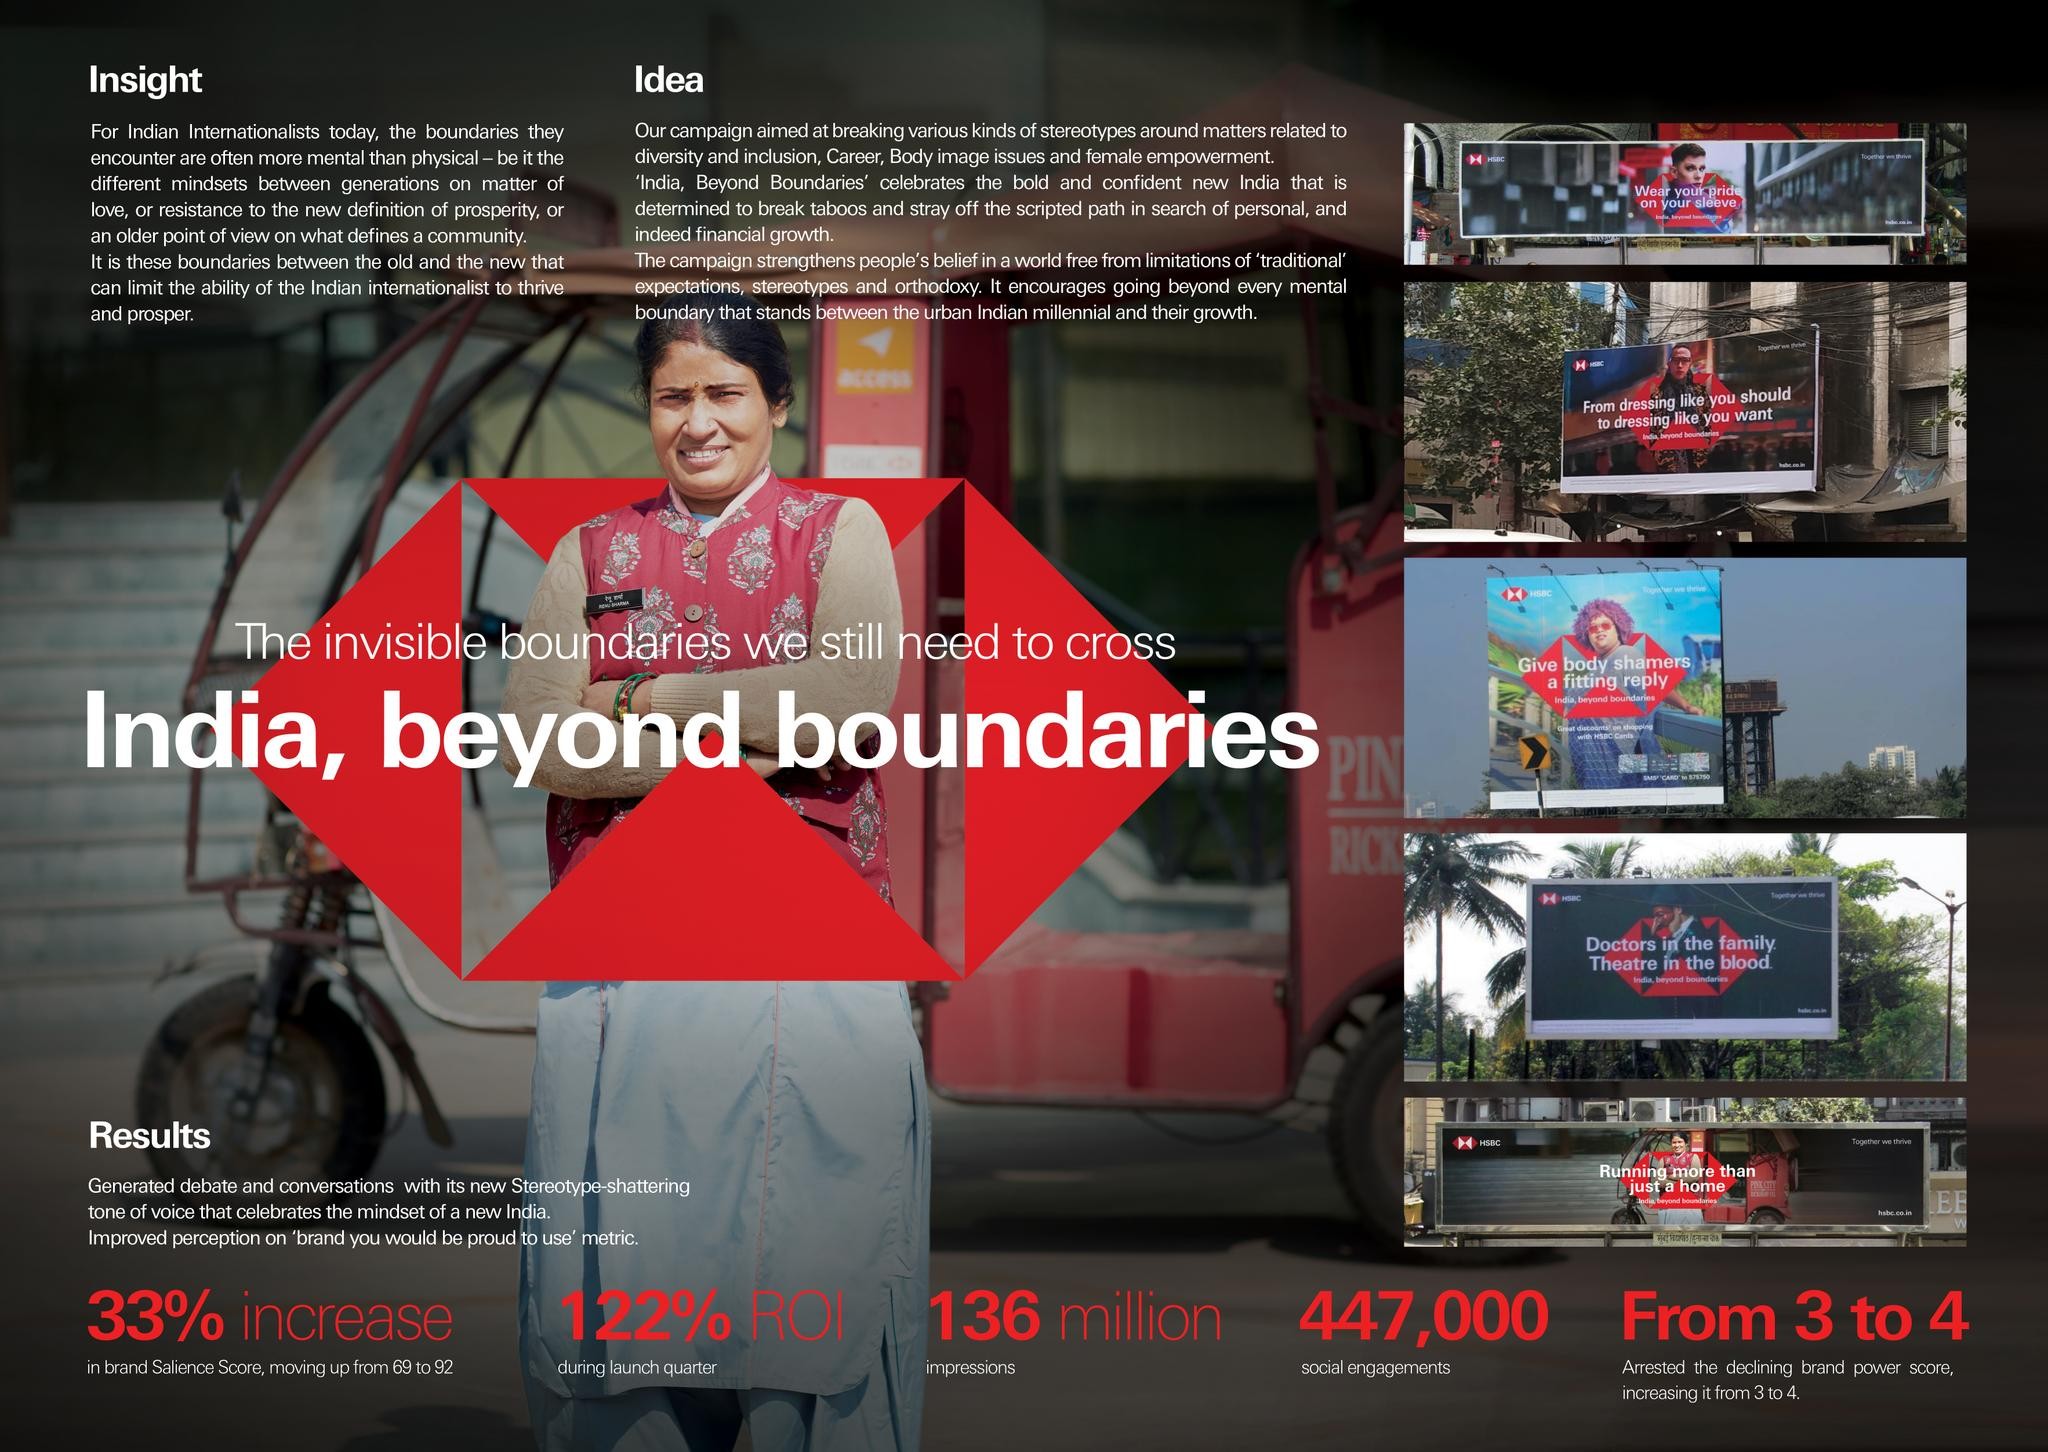 India beyond boundaries